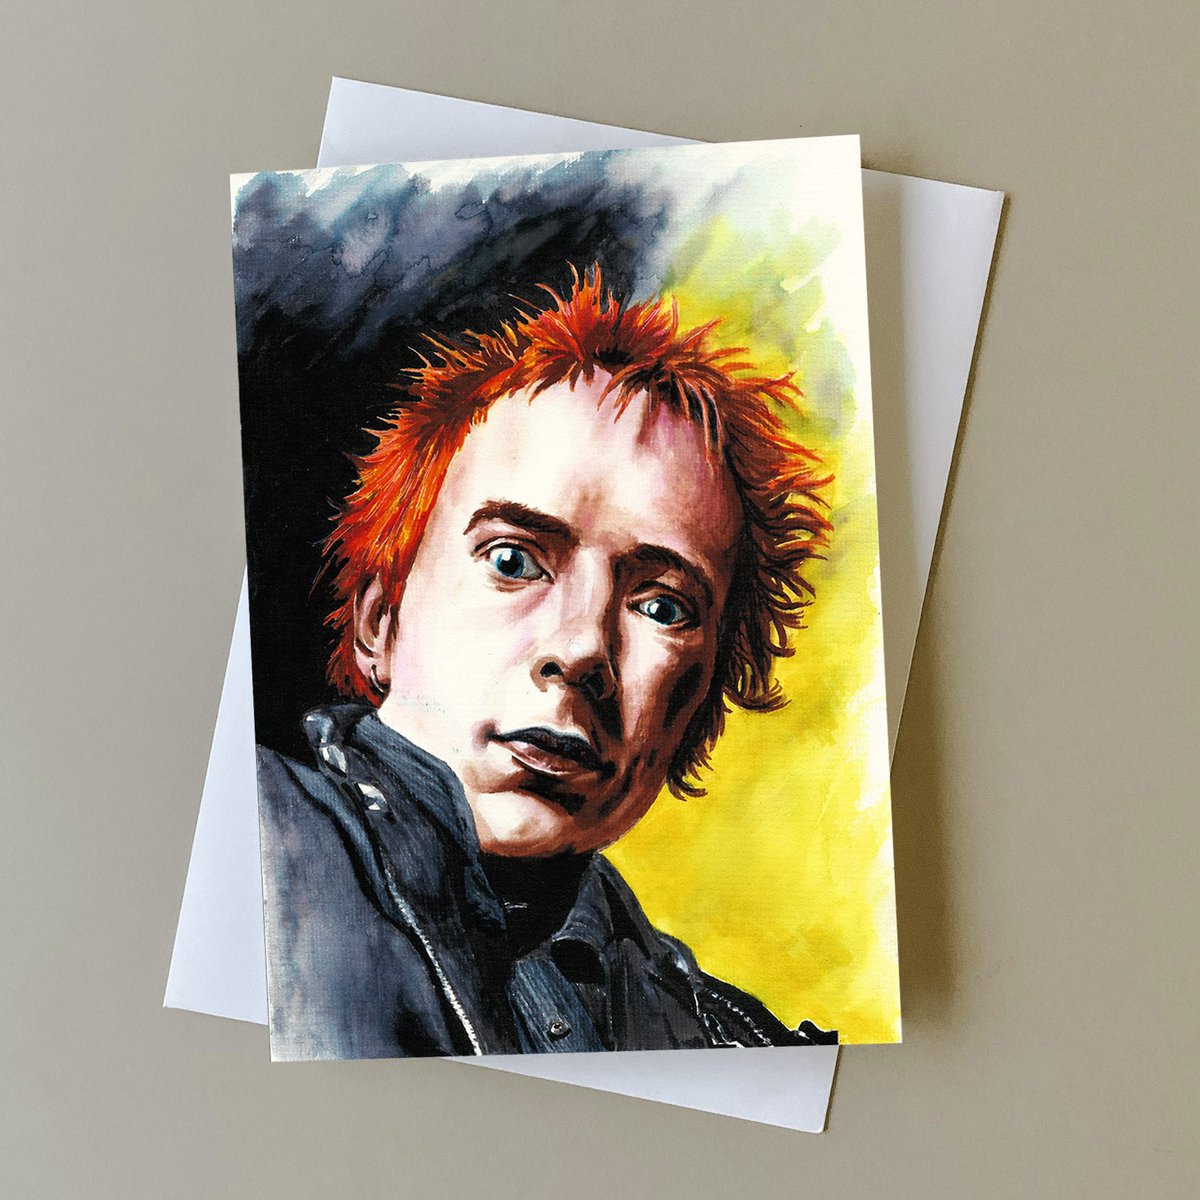 Johnny Rotten greeting card, Sex Pistols card, punk rock birthday card, Gift for punk fan, personalised card, John Lydon, Public Image Ltd tuppu.net/43032988 #Artwork #GreetingCards #GiftIdeas #JohnnyRotten